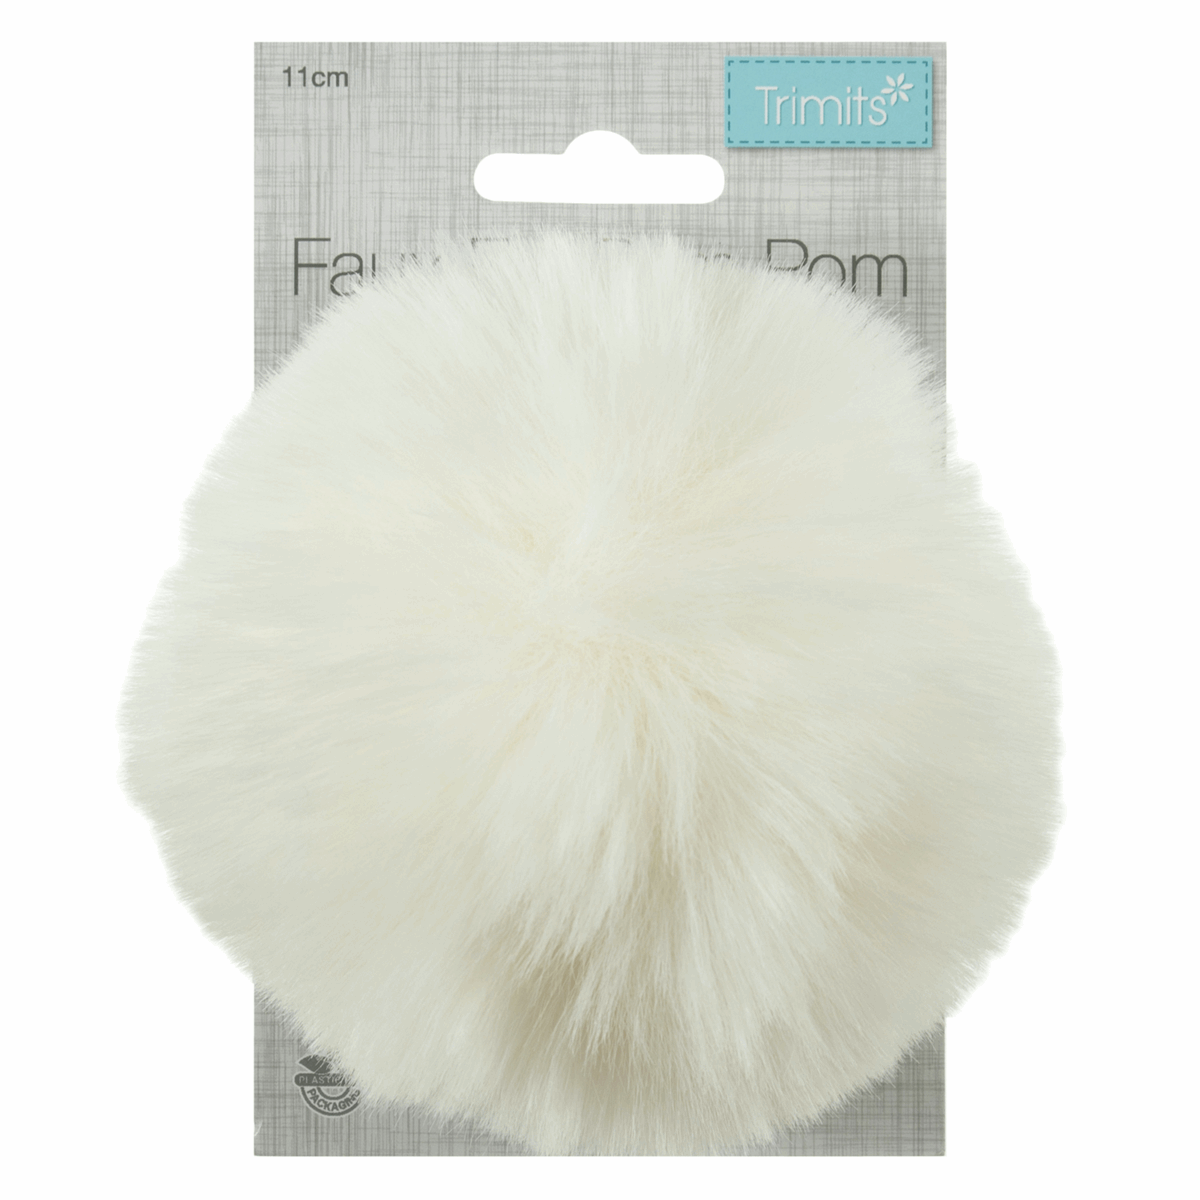 Trimits Faux Fur Super Fluffy Pom Pom - Cream 11cm